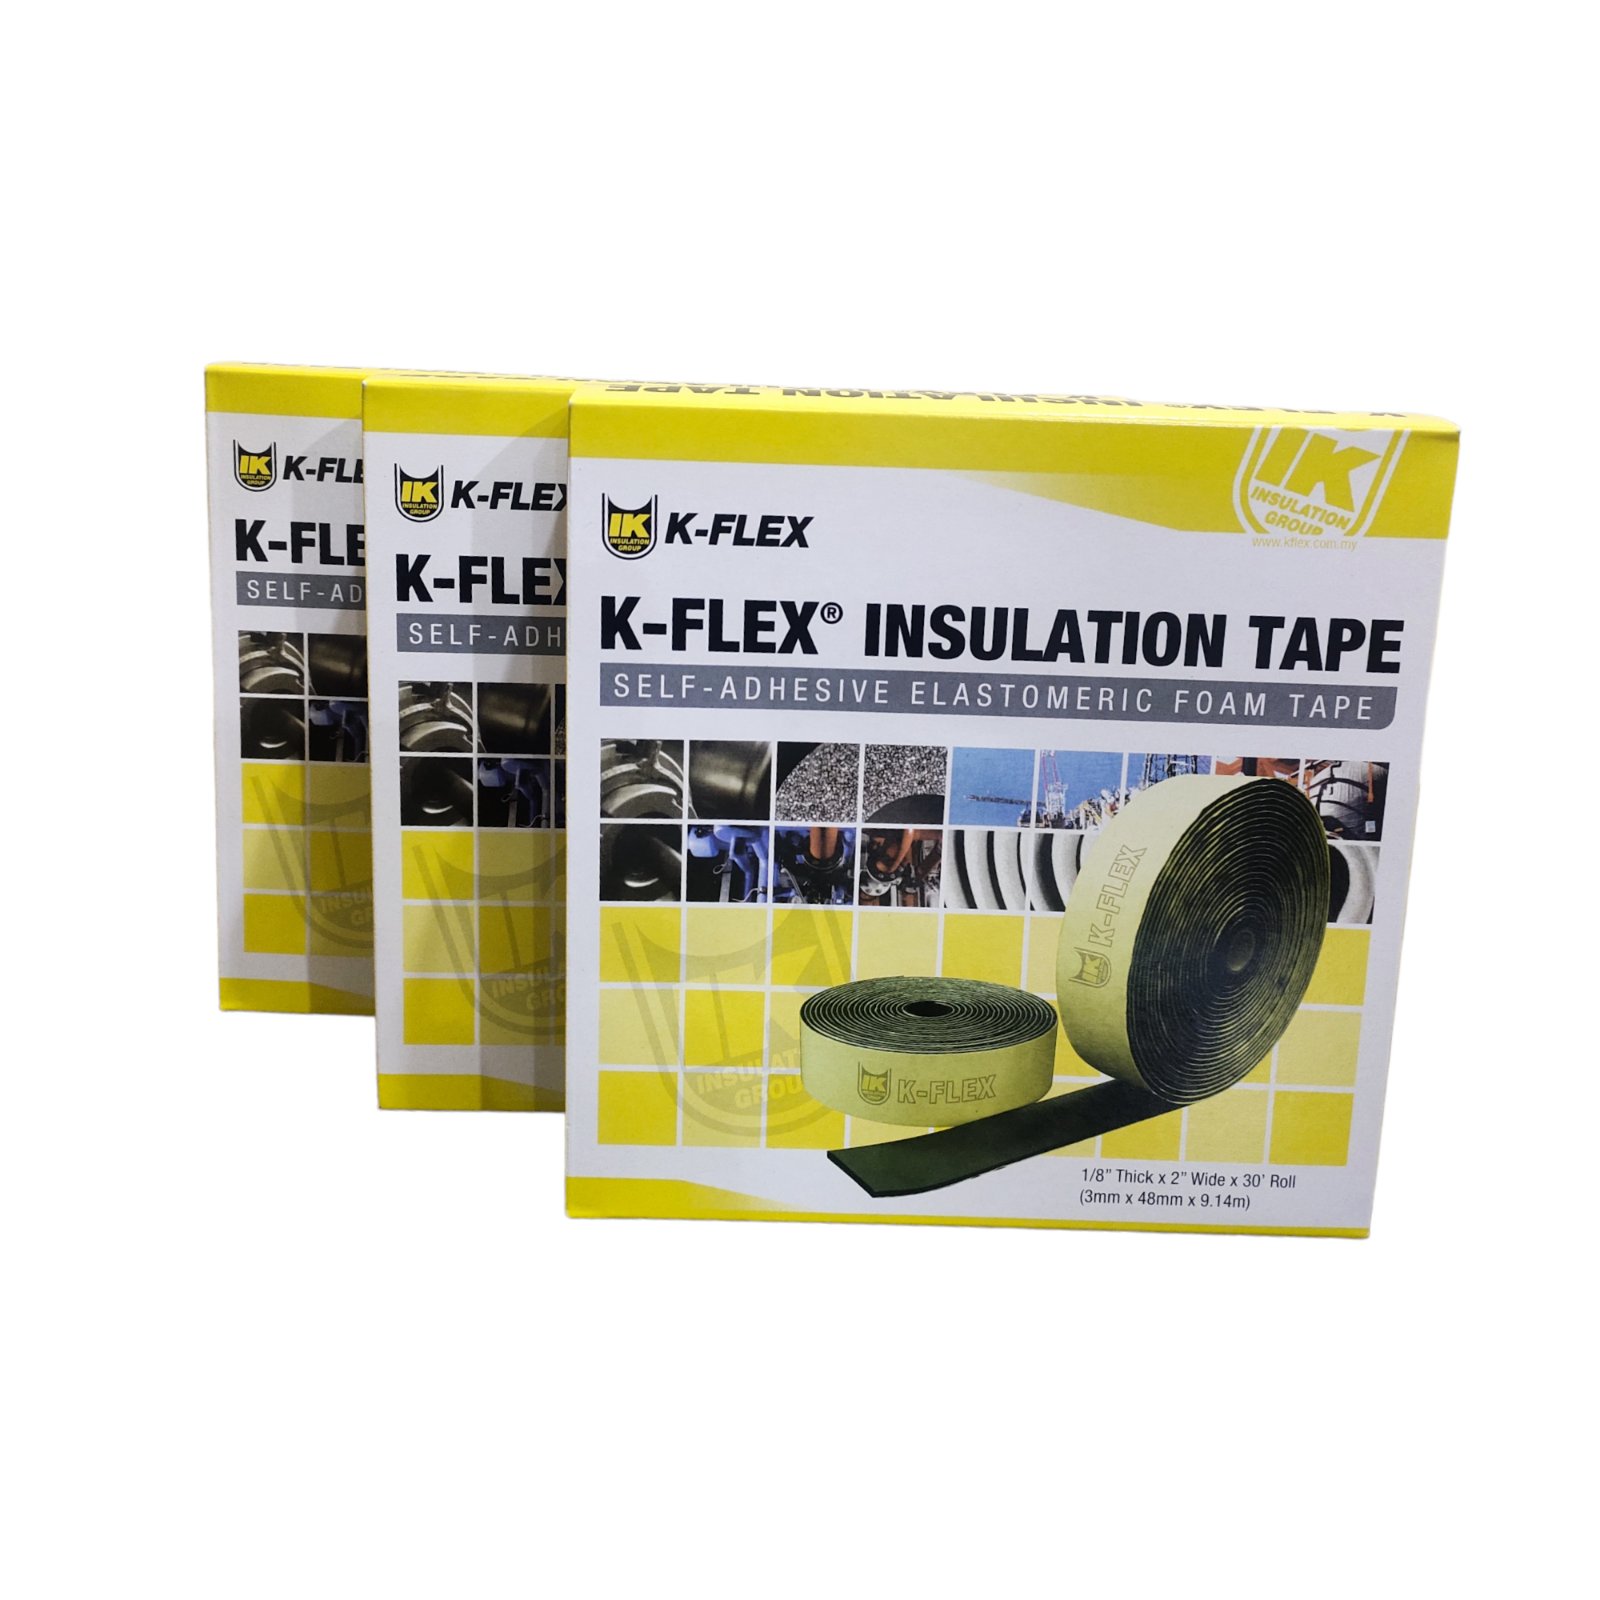 AEROTAPE K-FLEX Insulation Tape Self Adhesive Elastomeric Foam